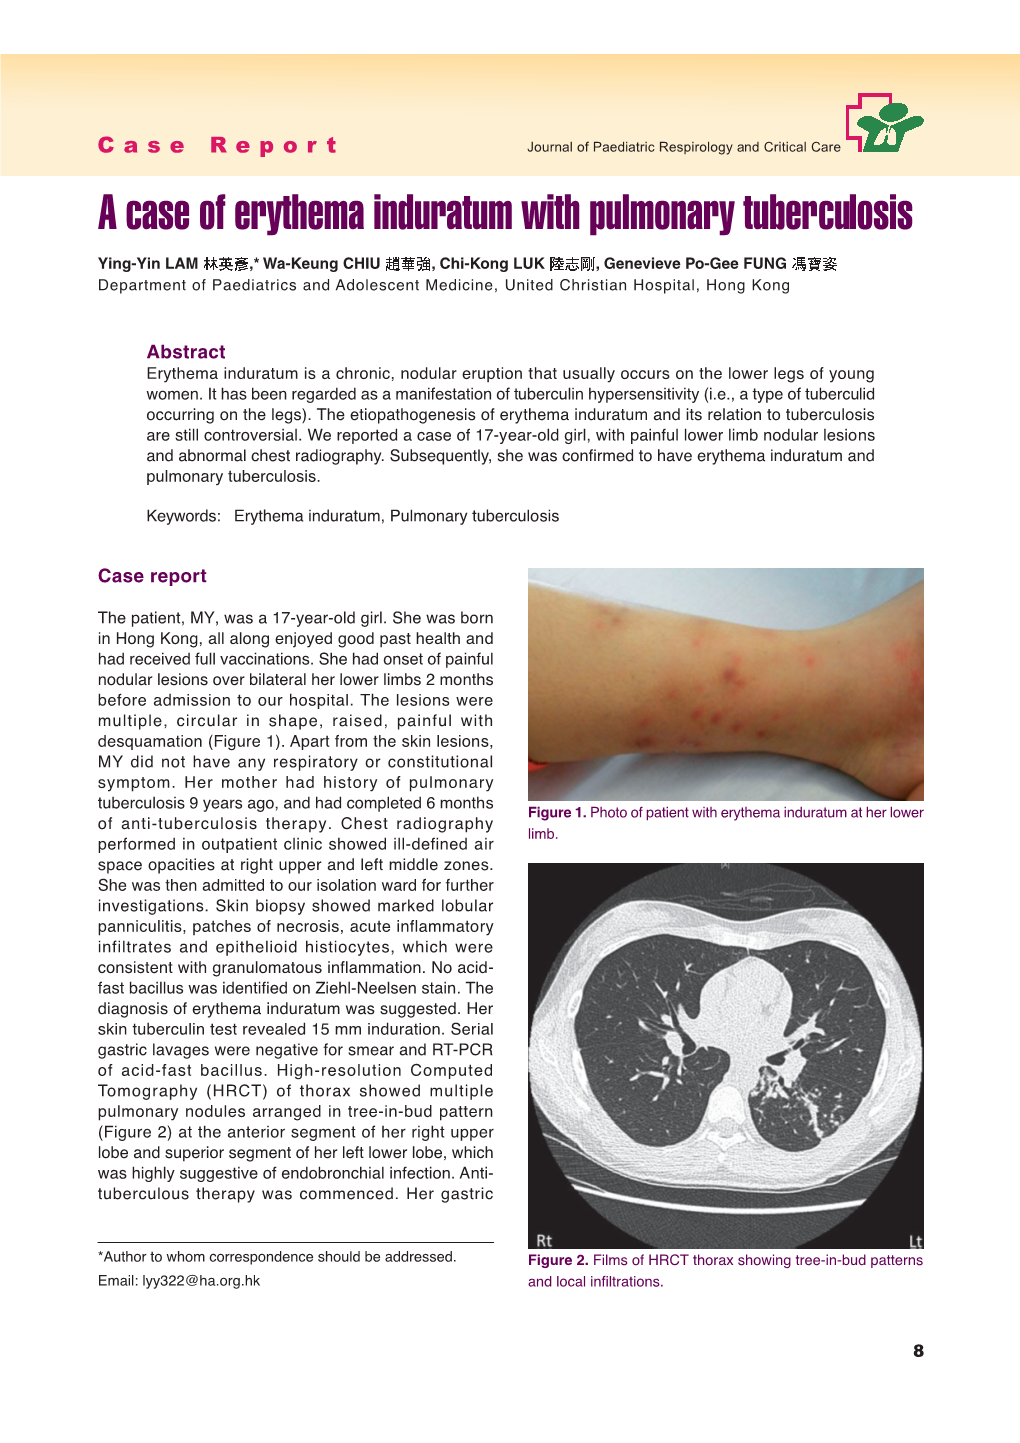 A Case of Erythema Induratum with Pulmonary Tuberculosis